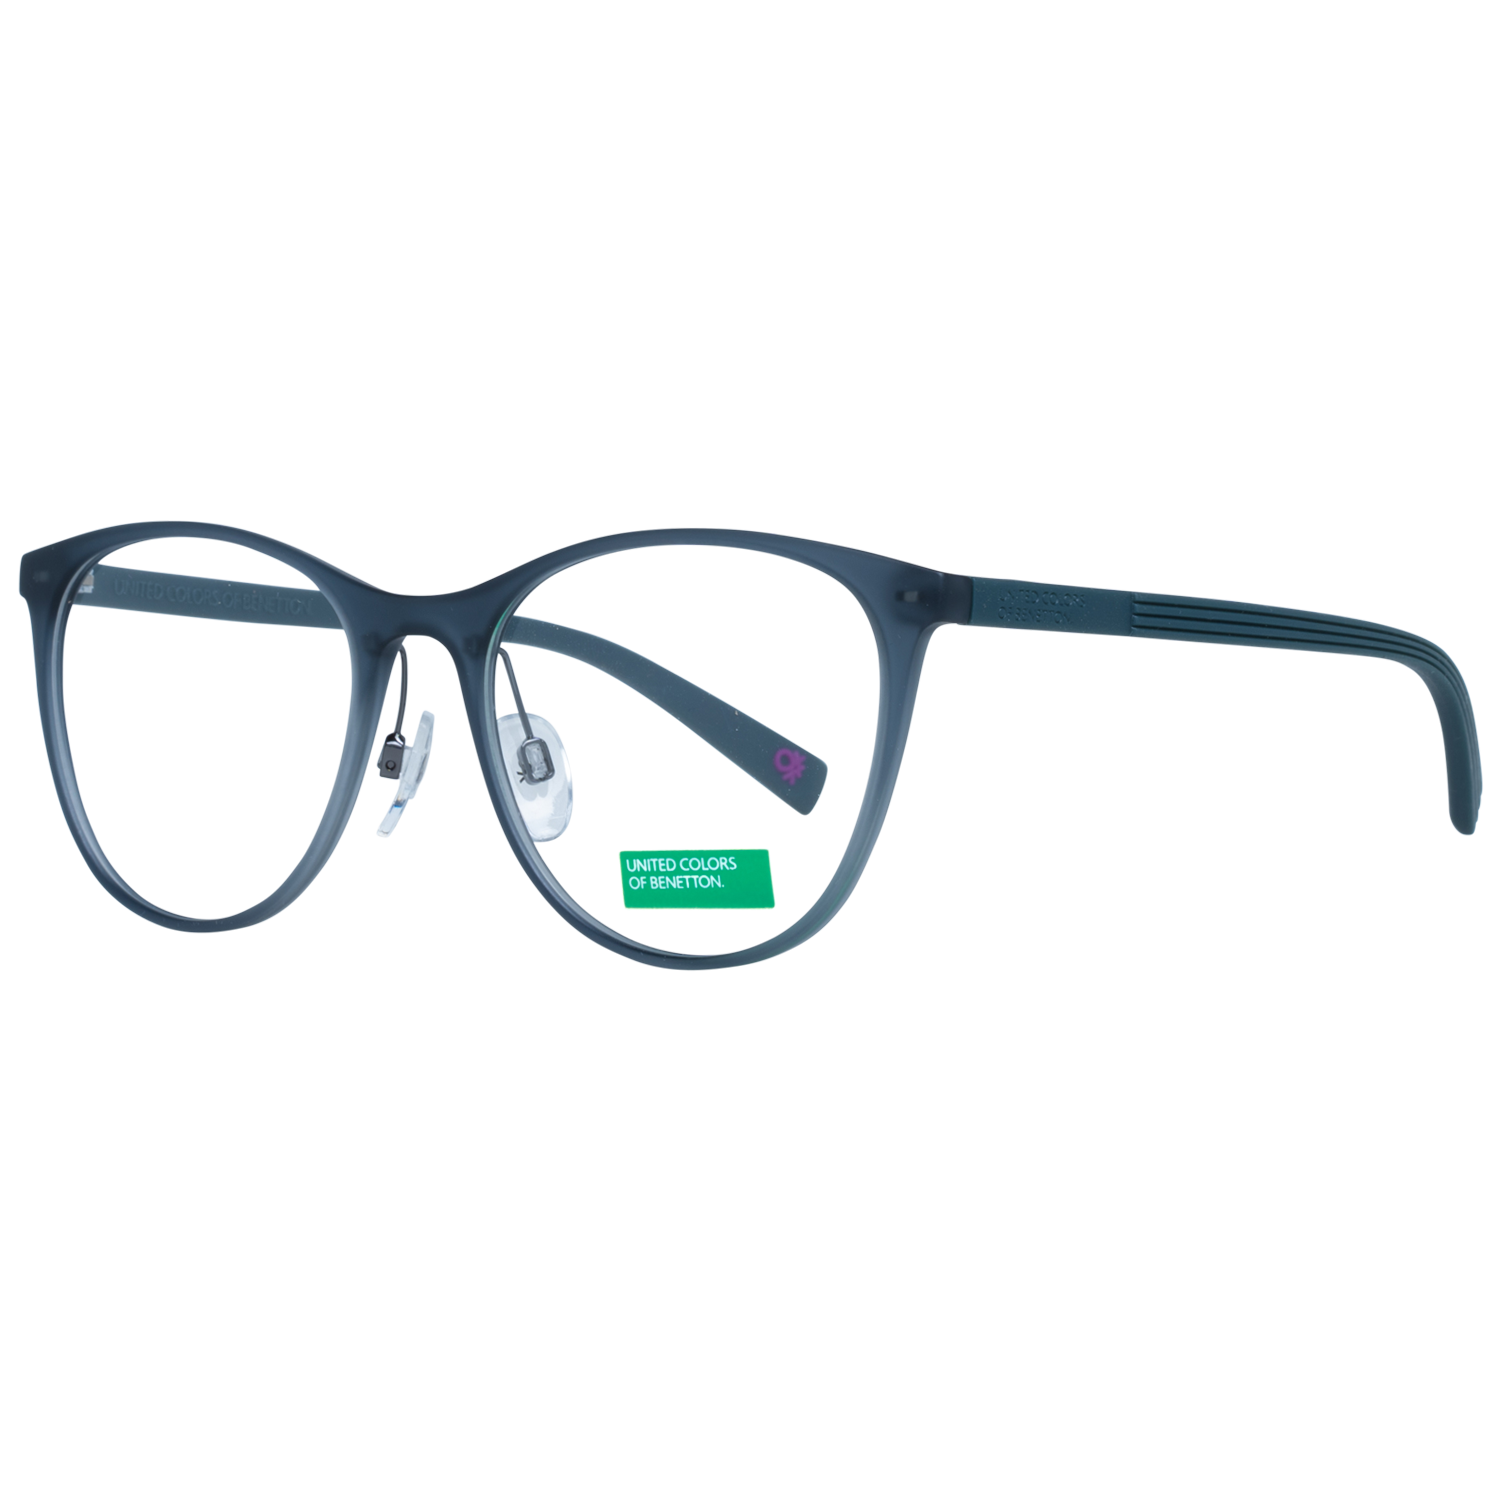 Benetton Frames Benetton Optical Frame BEO1012 921 51 Eyeglasses Eyewear UK USA Australia 